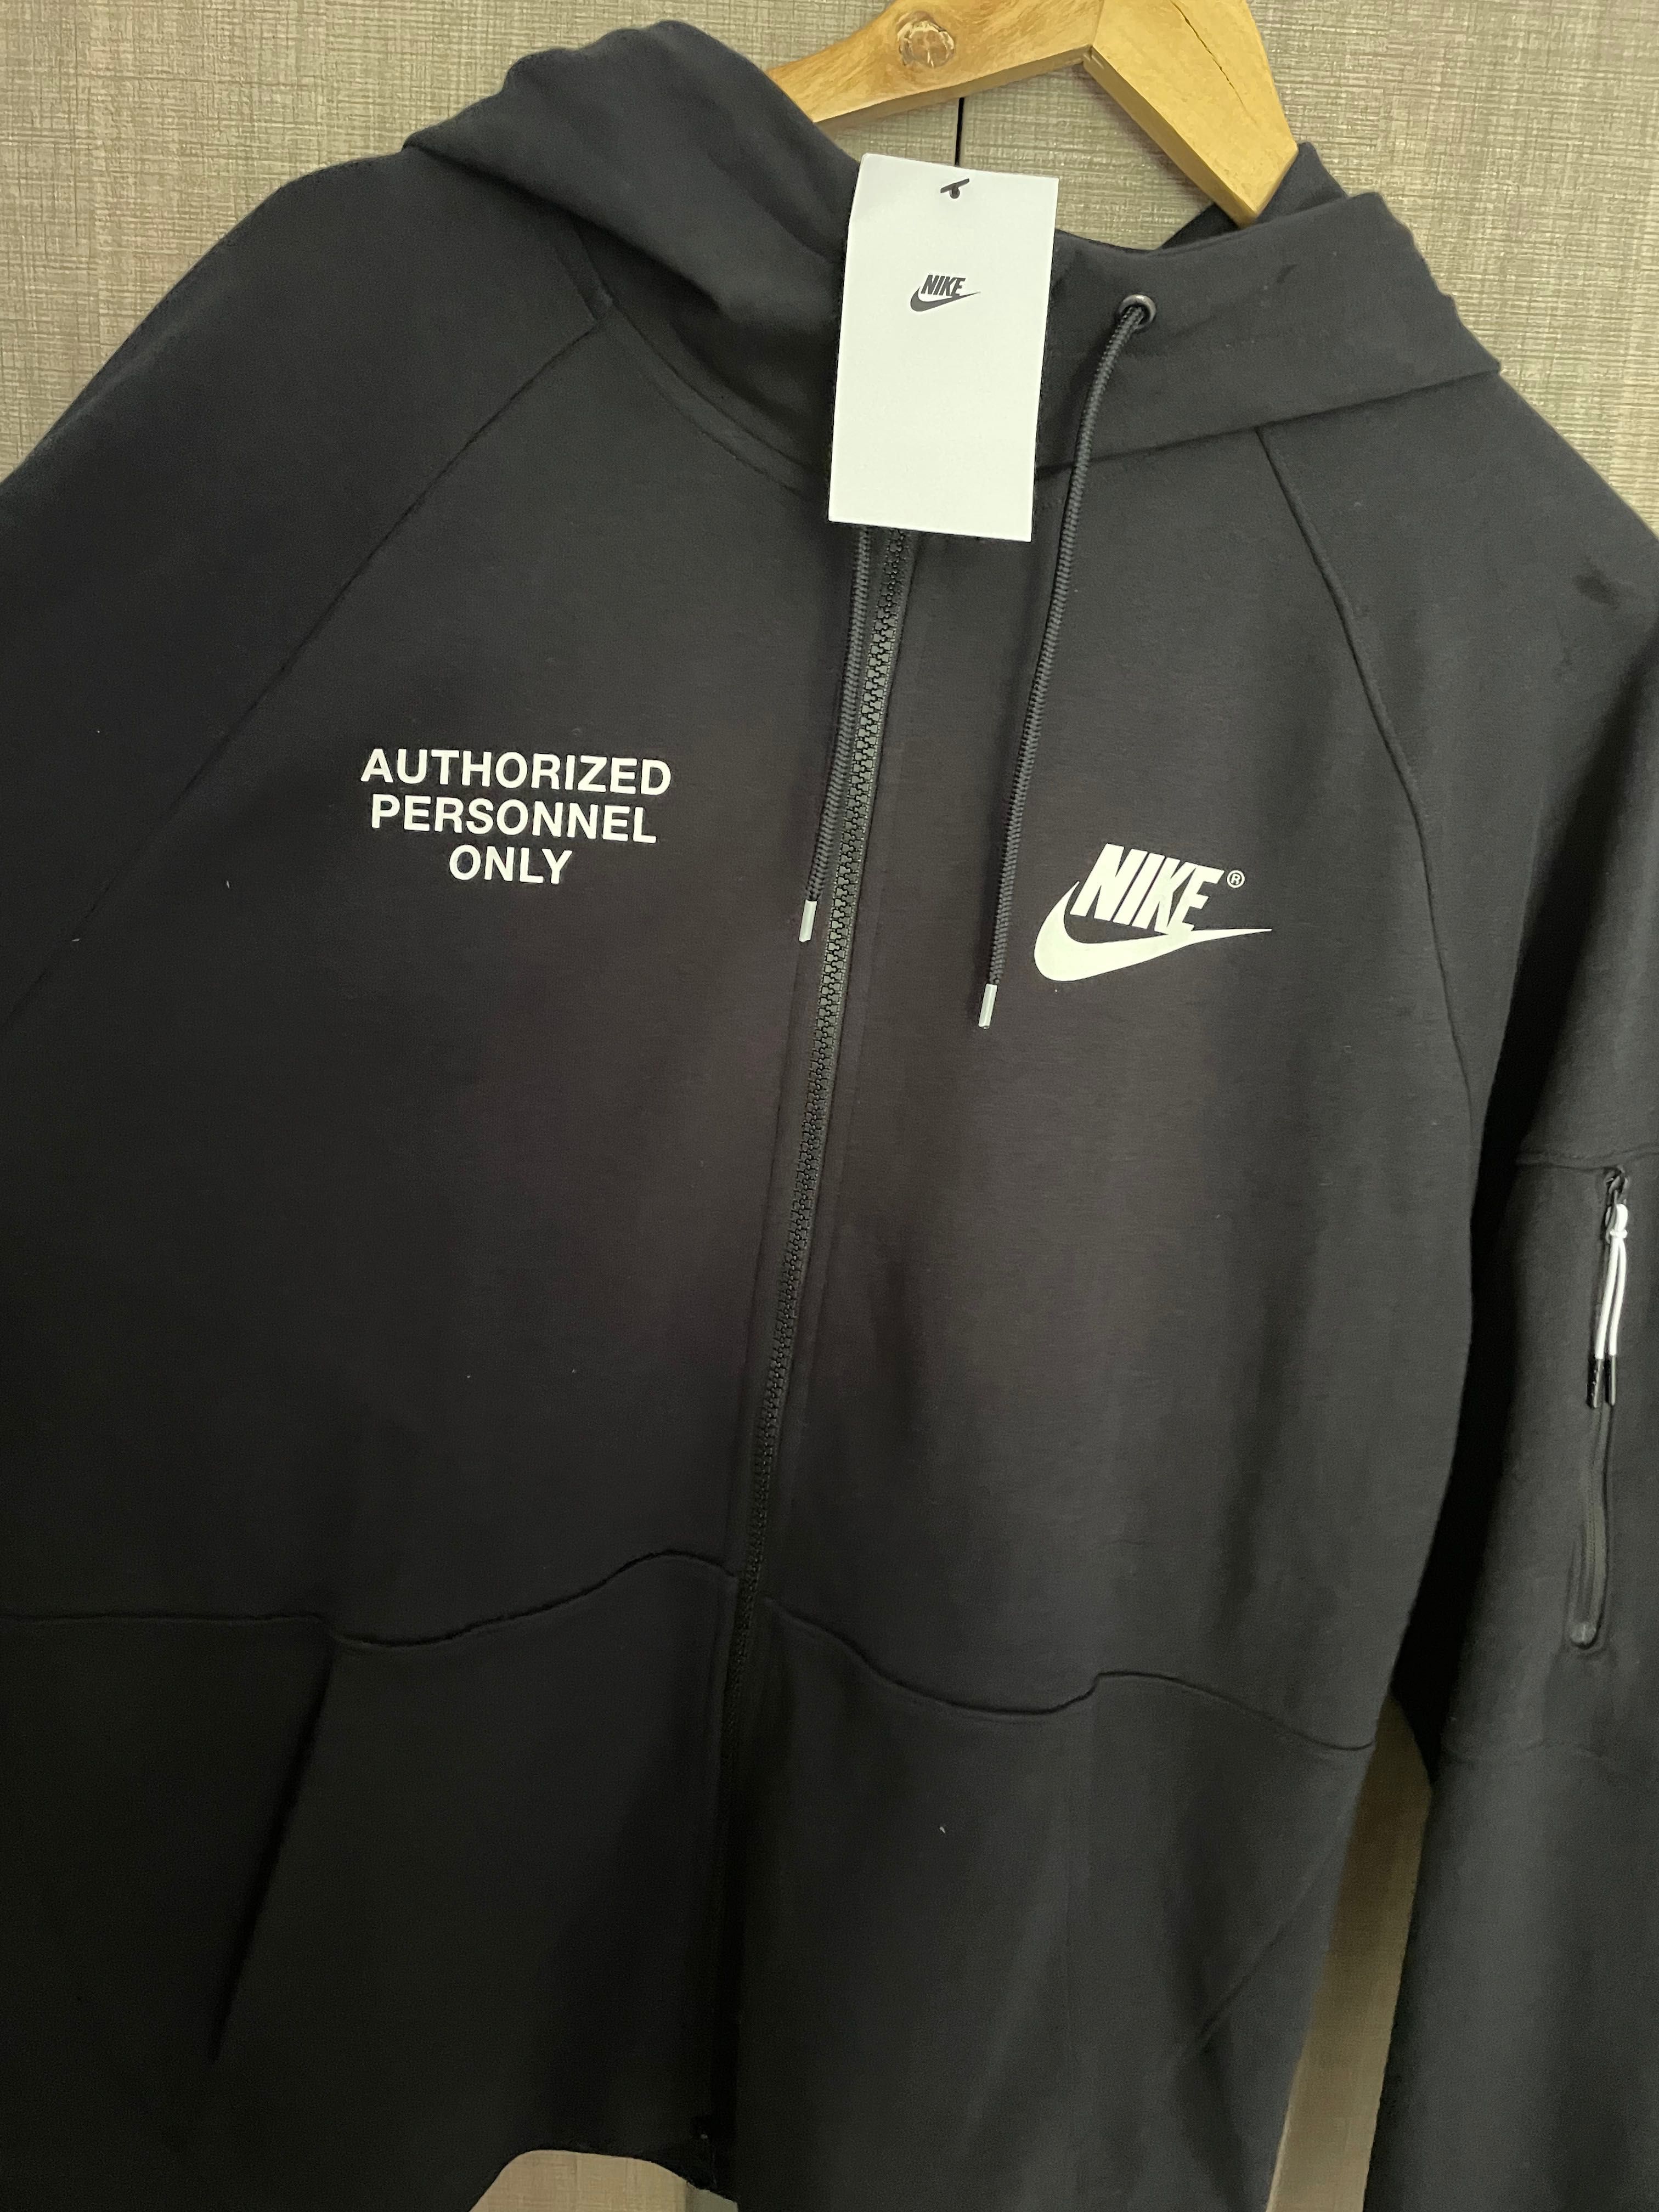 Nike fleece hoodie personnel only